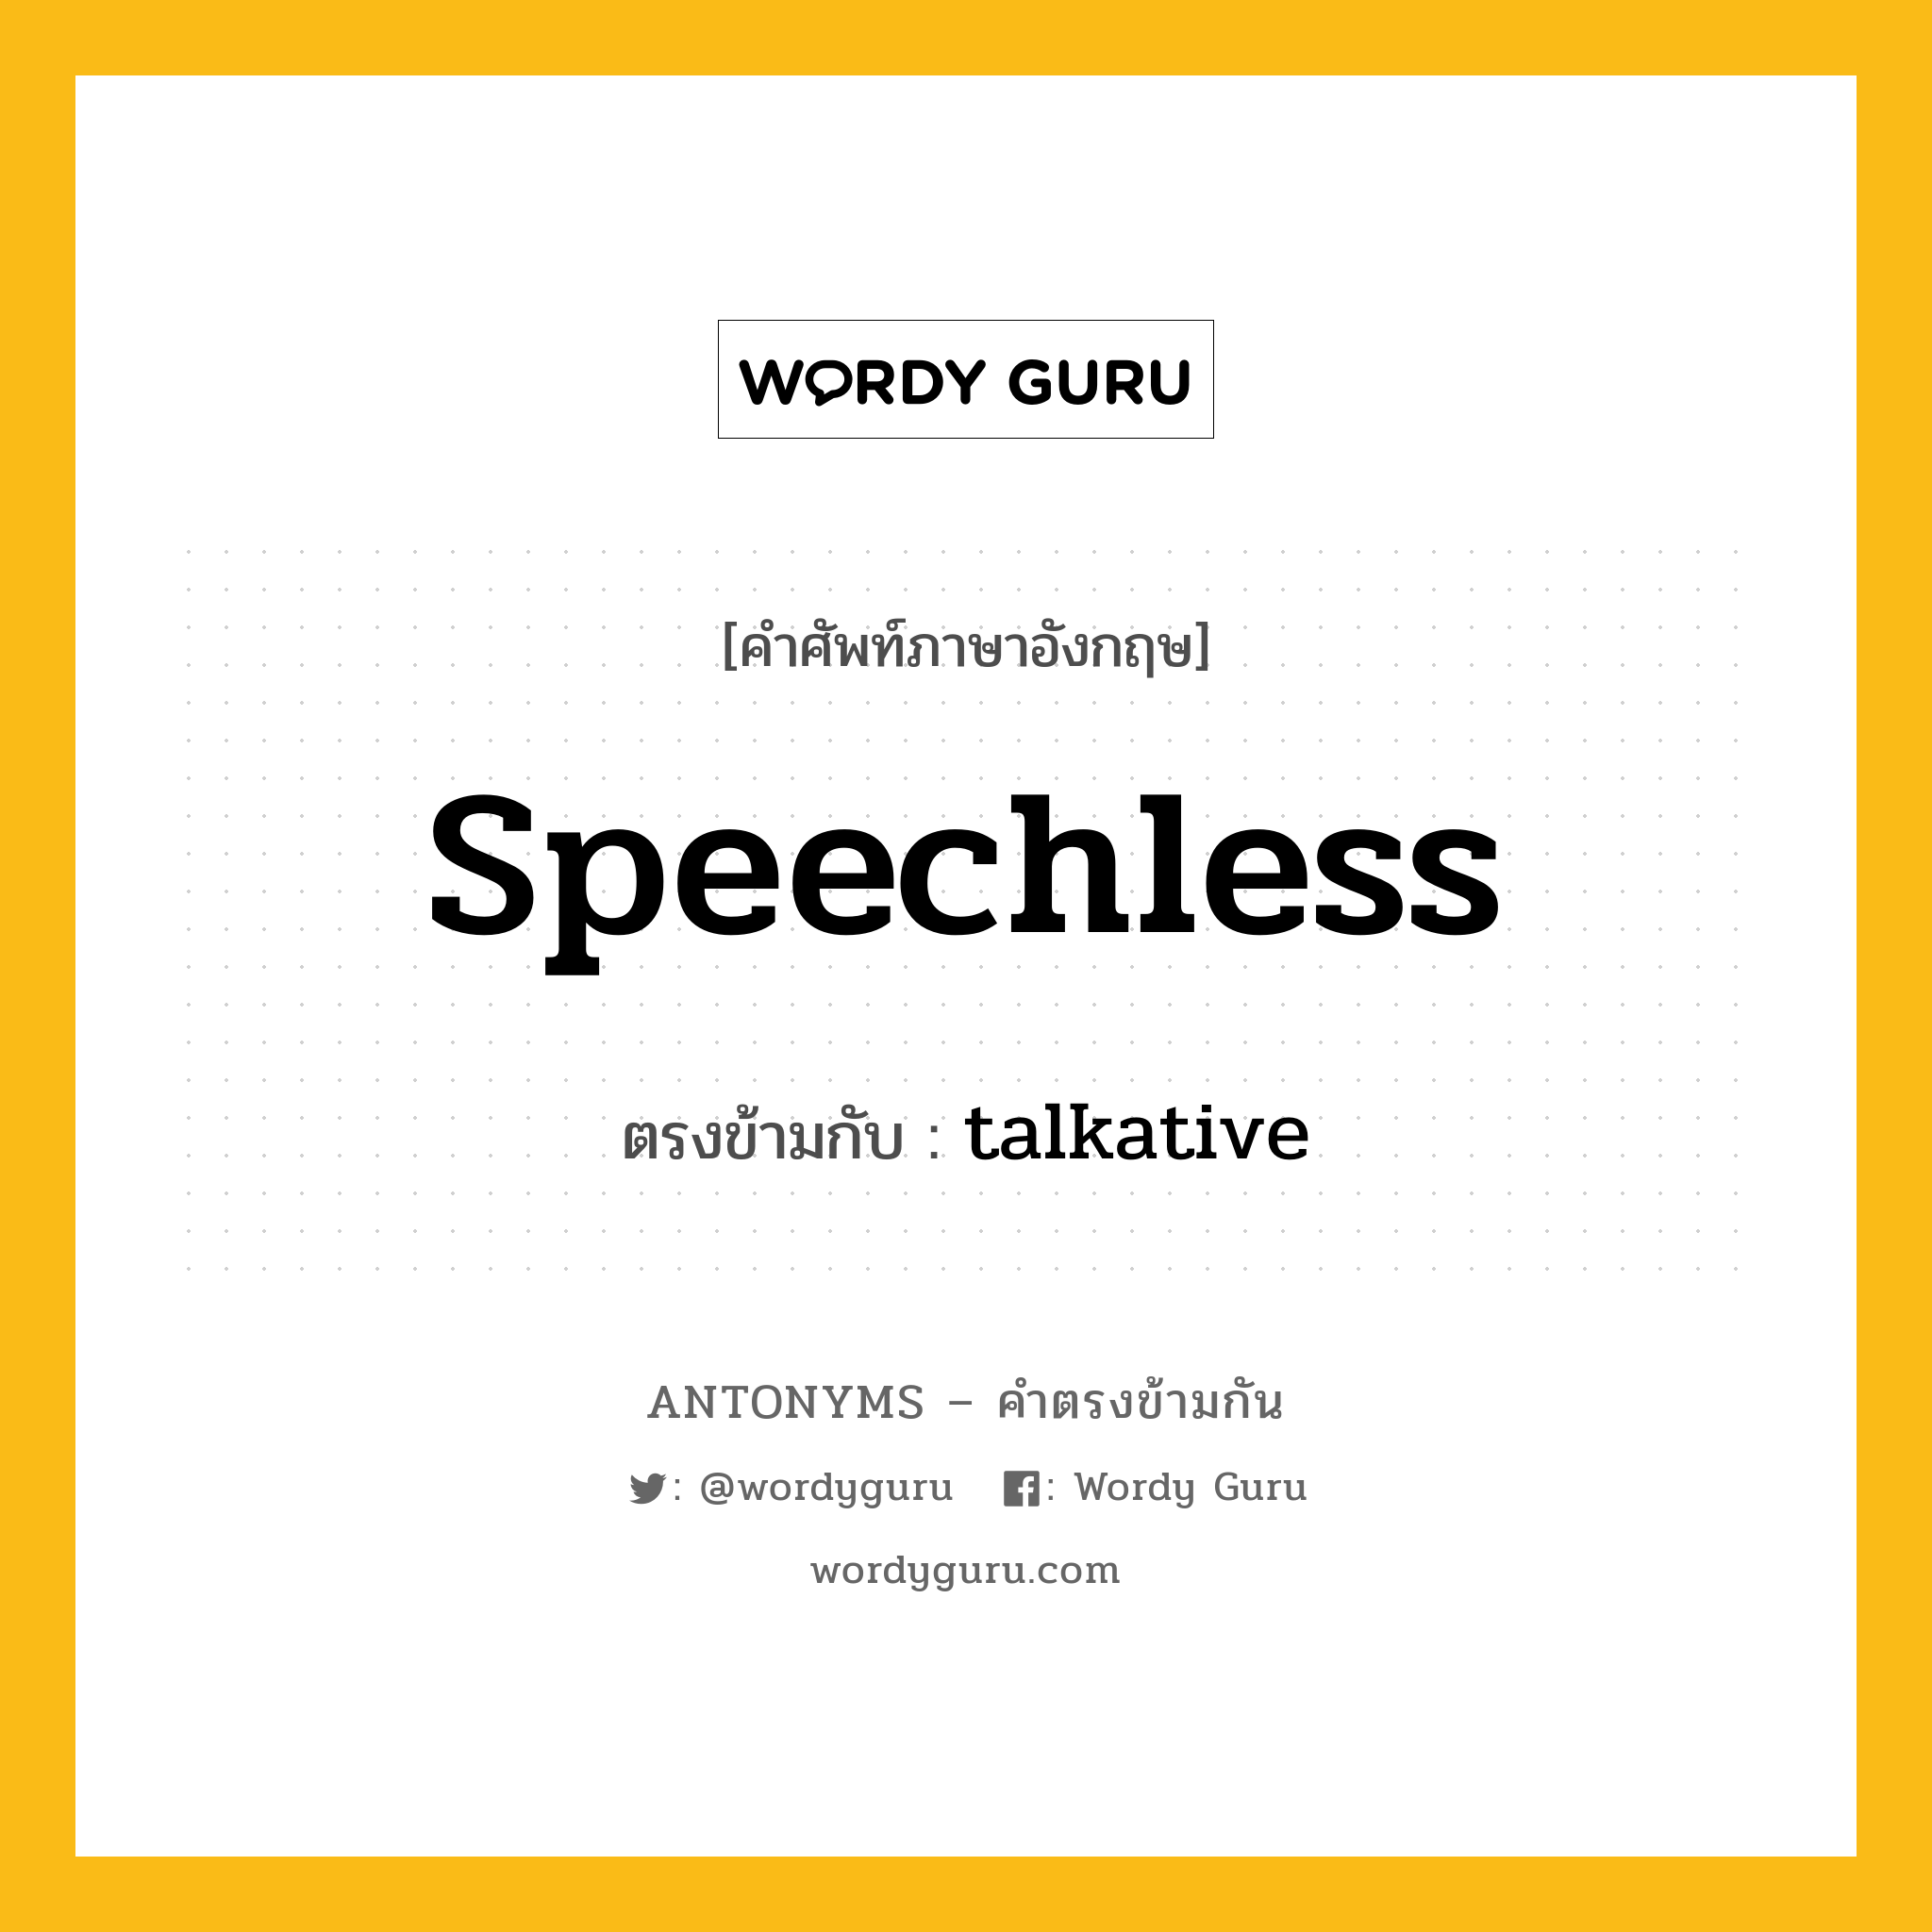 speechless เป็นคำตรงข้ามกับคำไหนบ้าง?, คำศัพท์ภาษาอังกฤษ speechless ตรงข้ามกับ talkative หมวด talkative